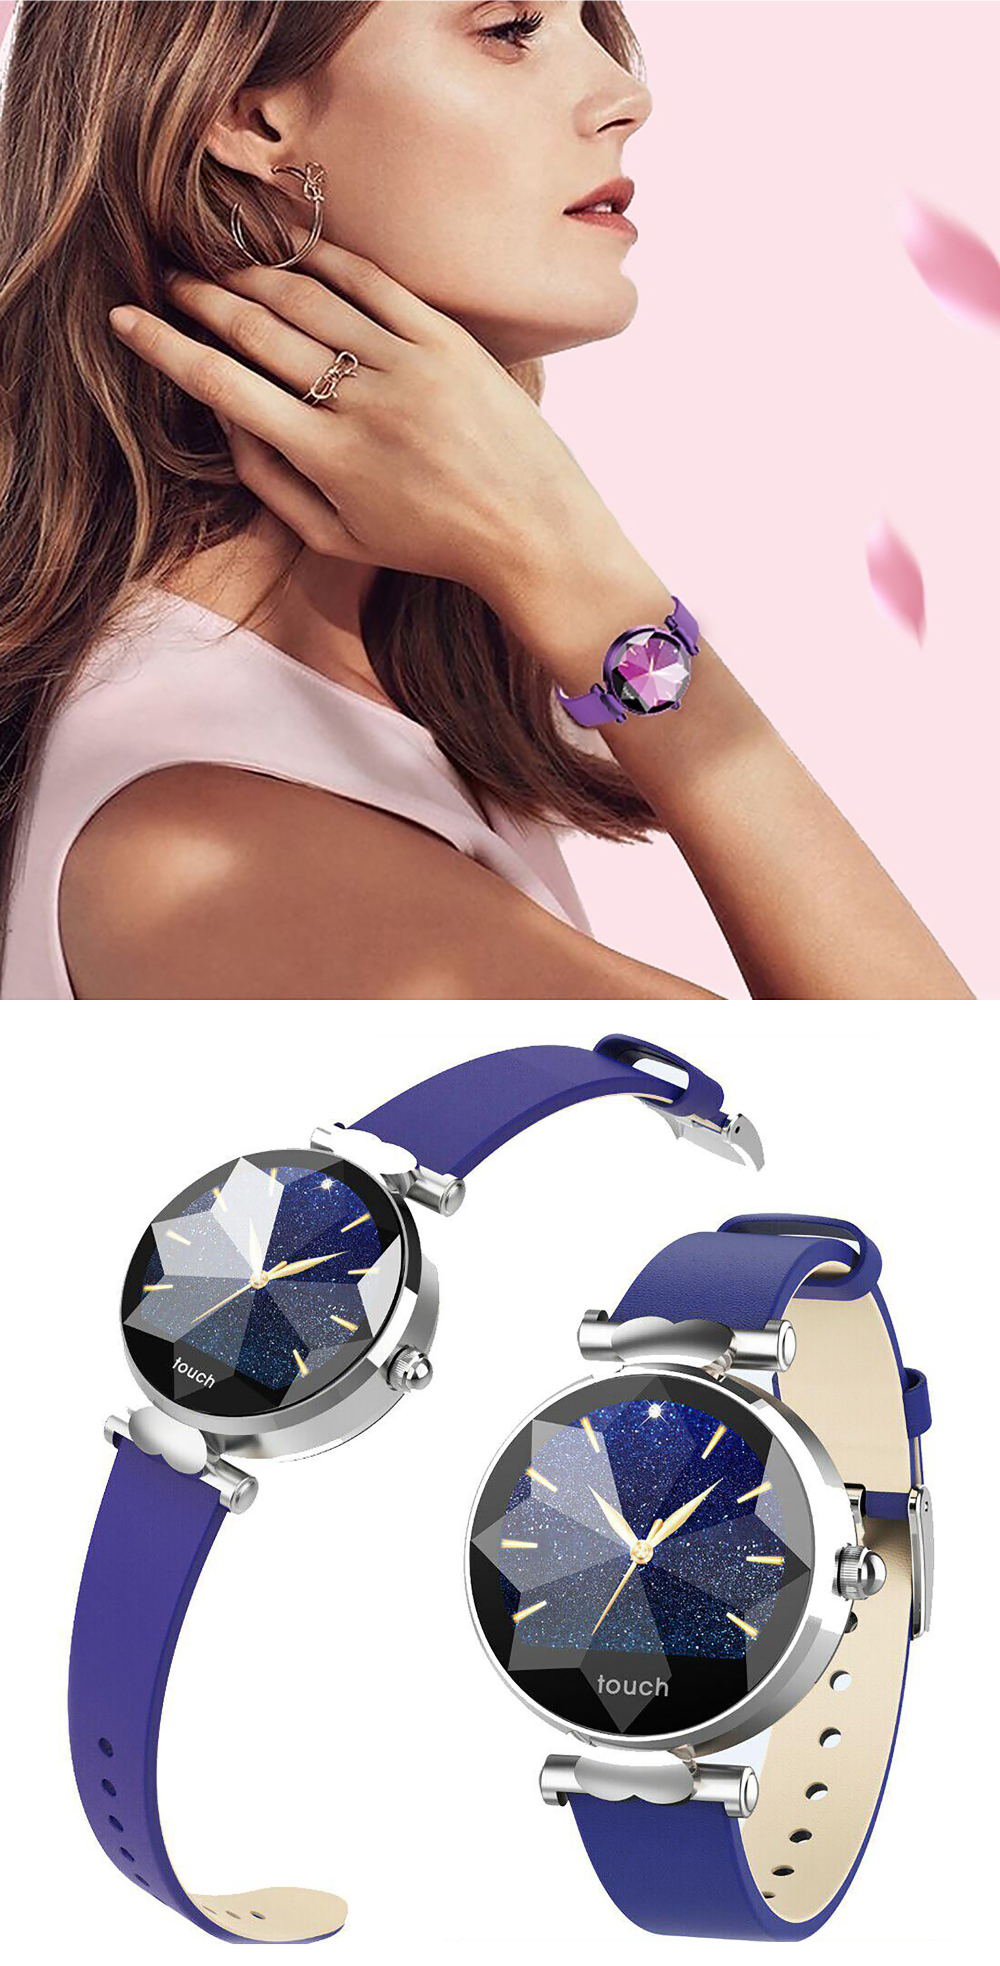 Ceas Smartwatch fitness fashion TKY-B80 Metal cu functie de monitorizare ritm cardiac, Tensiune arteriala, Monitorizare somn, Notificari Apel/ SMS, Argintiu